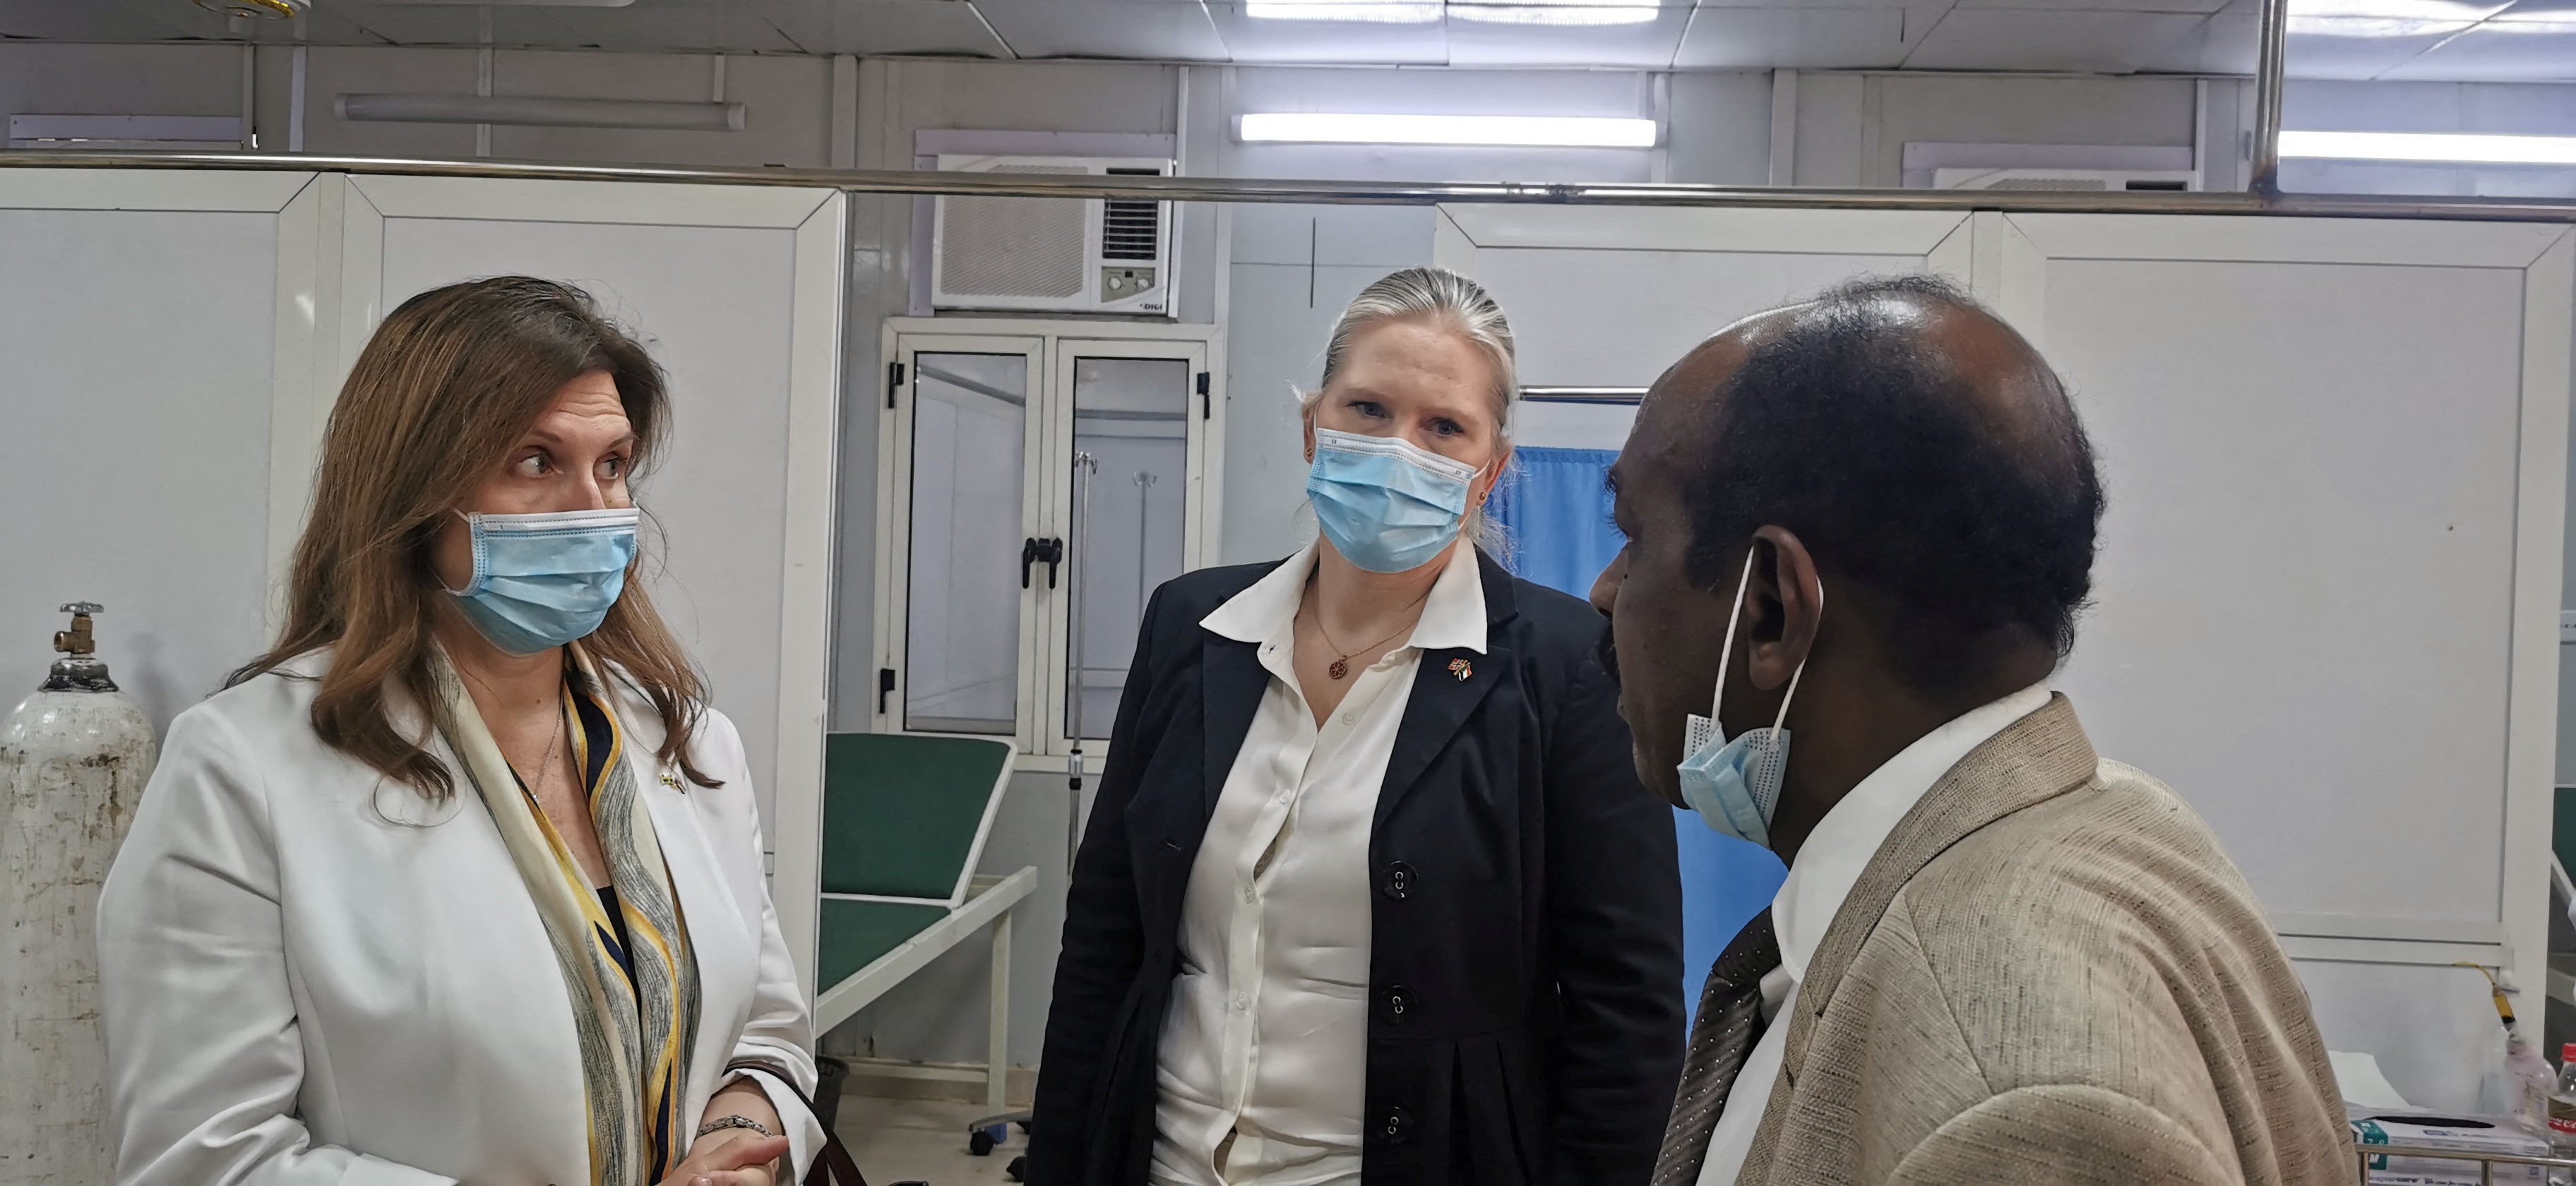 Swedish And Norwegian ambassadors to Sudan visit Khartoum Teaching Hospital in Khartoum